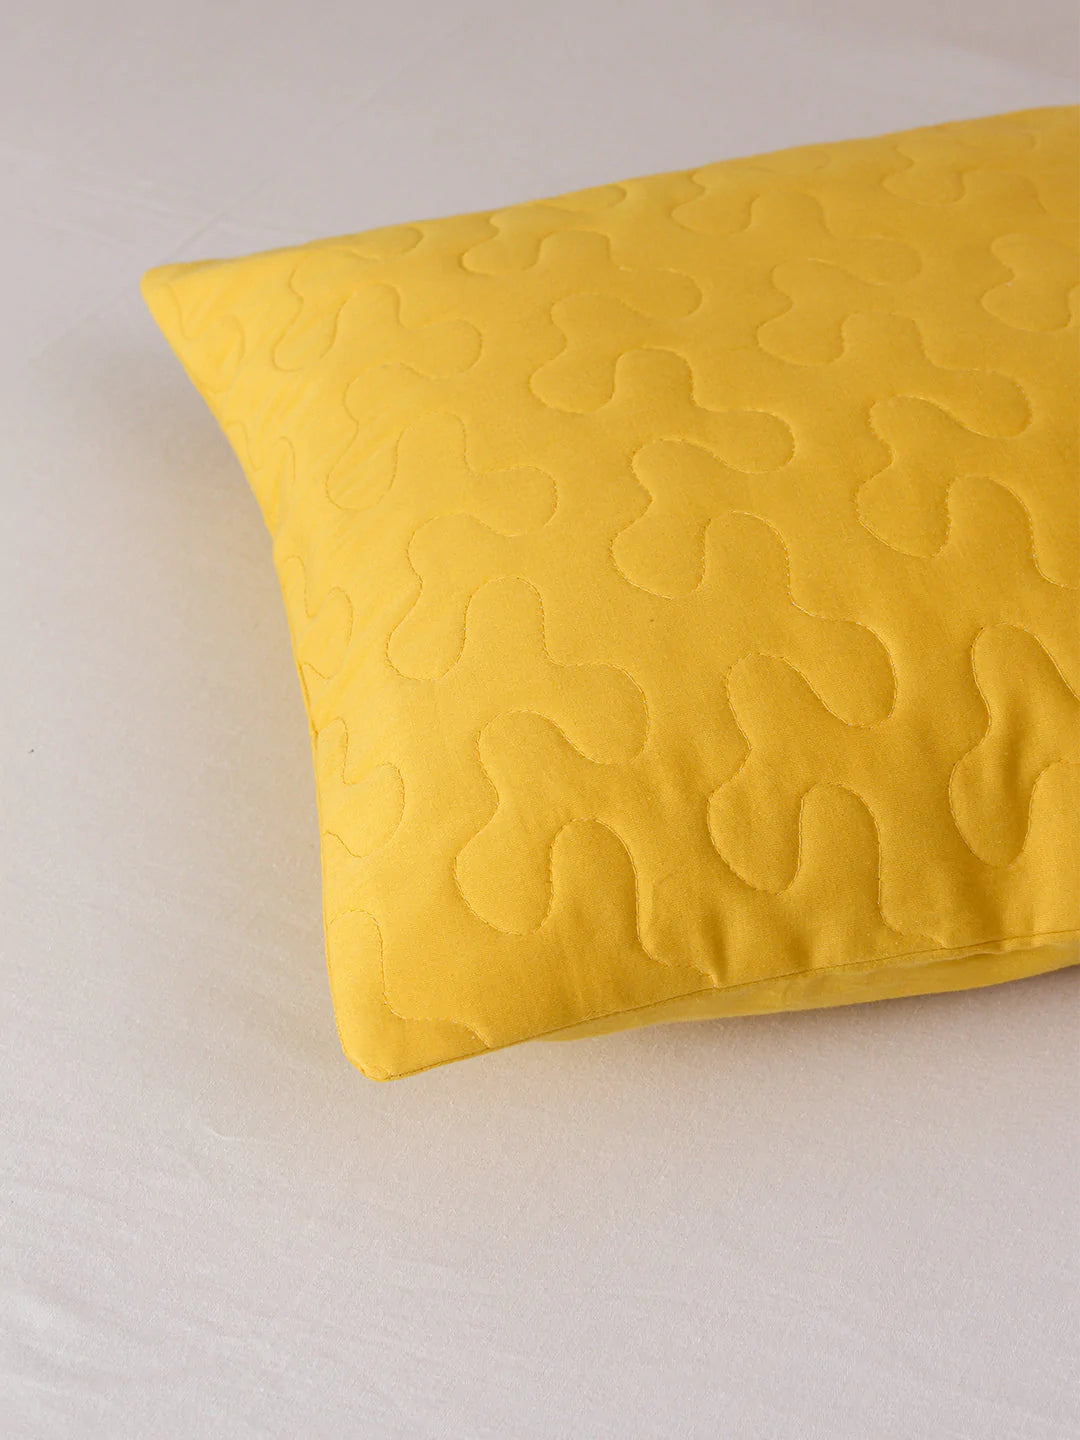 Suryamukhi Yellow Pillow Cover